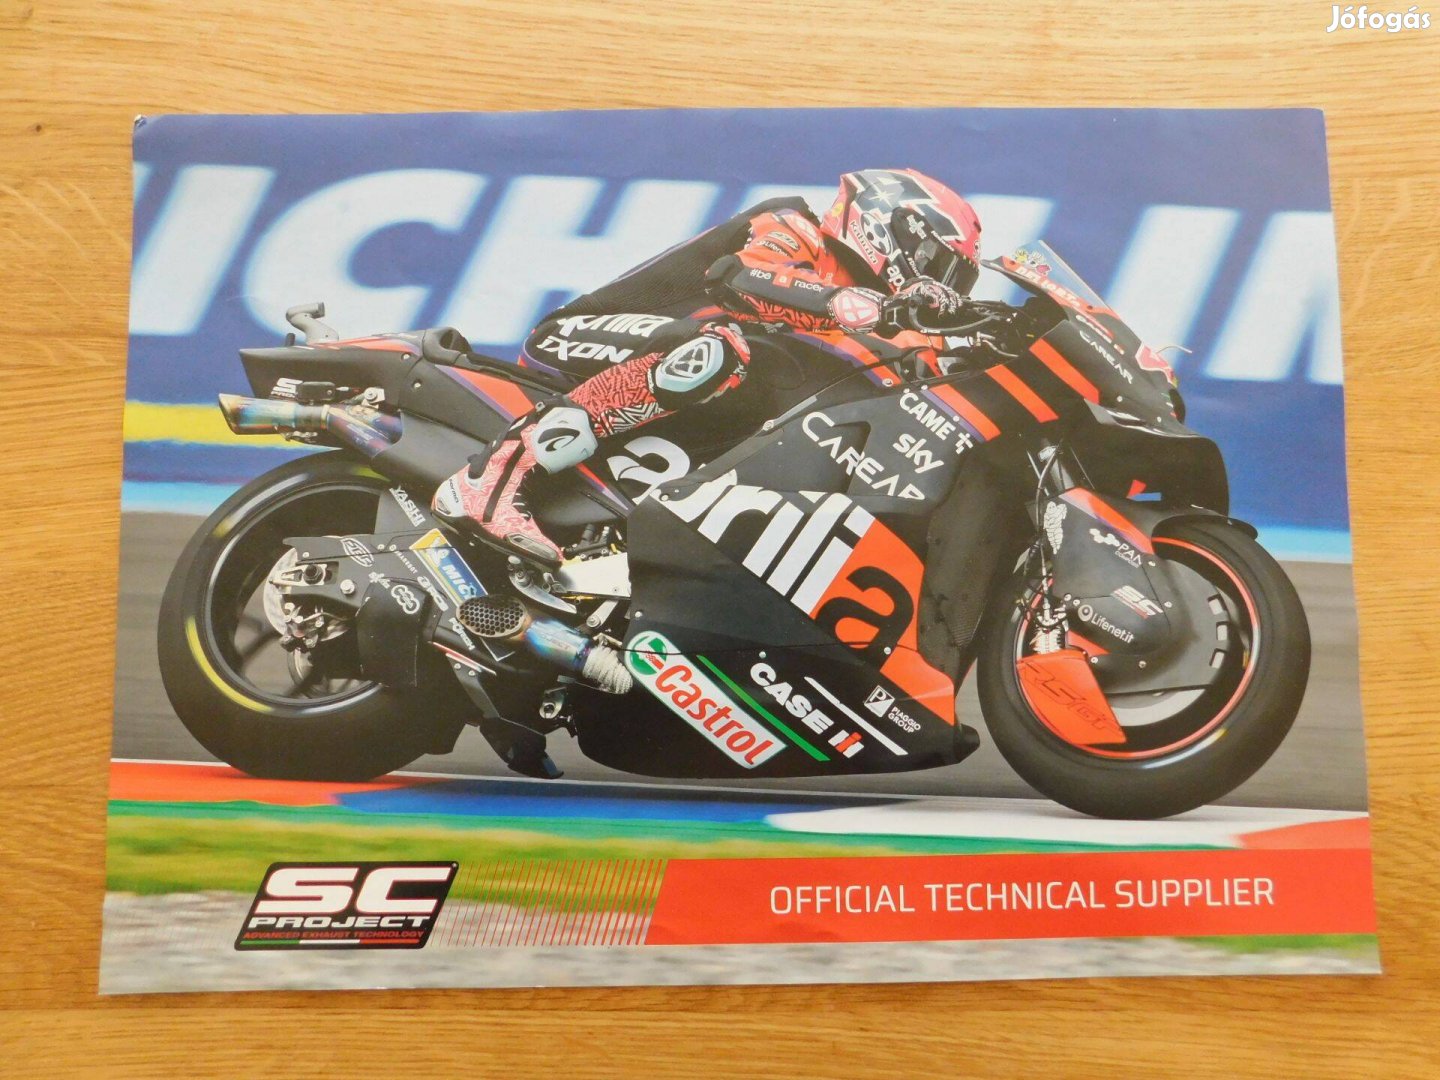 Aleix Espargaro #41 Aprilia Racing Motogp Team Poster